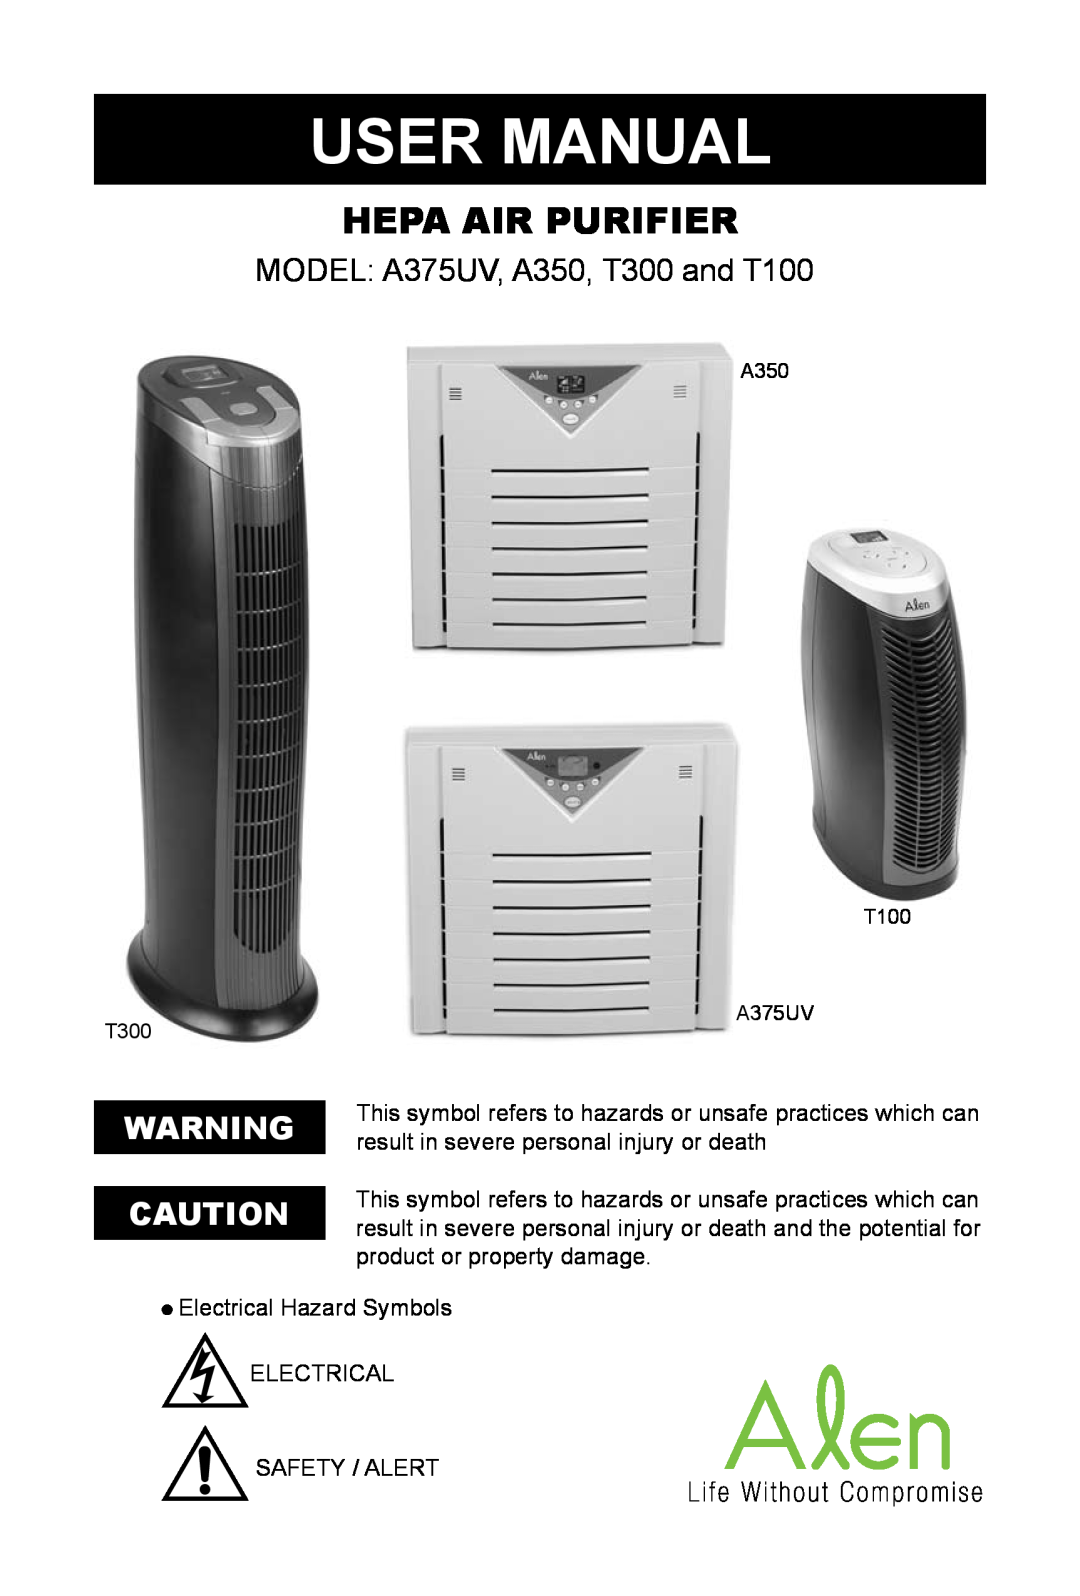 Alen A375 UV user manual Hepa Air Purifier, MODEL A375UV, A350, T300 and T100 